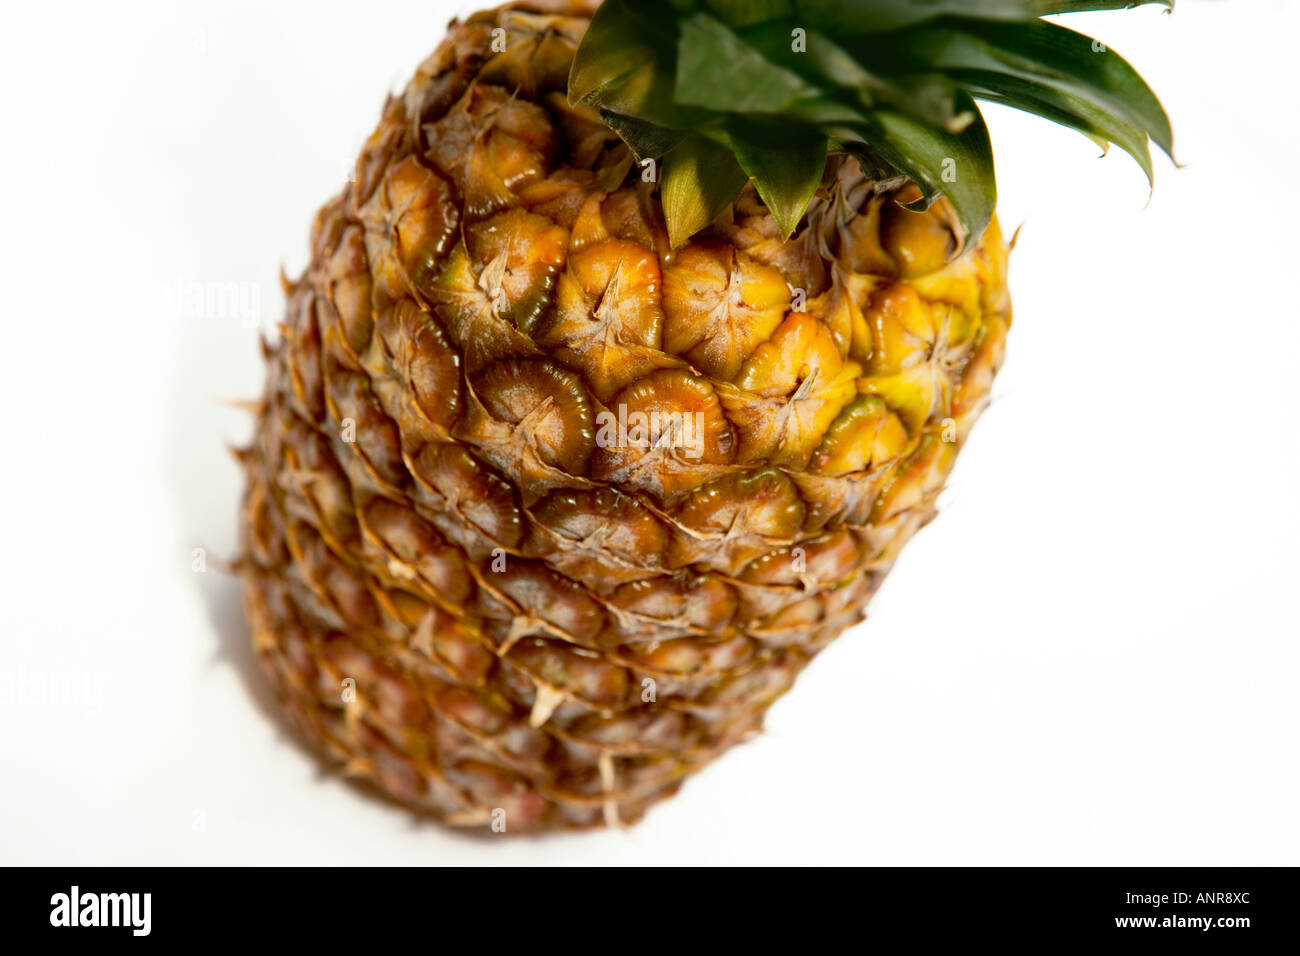 GEMEINSAMER NAME: Ananas lateinischer NAME: Ananas Comosus Stockfoto